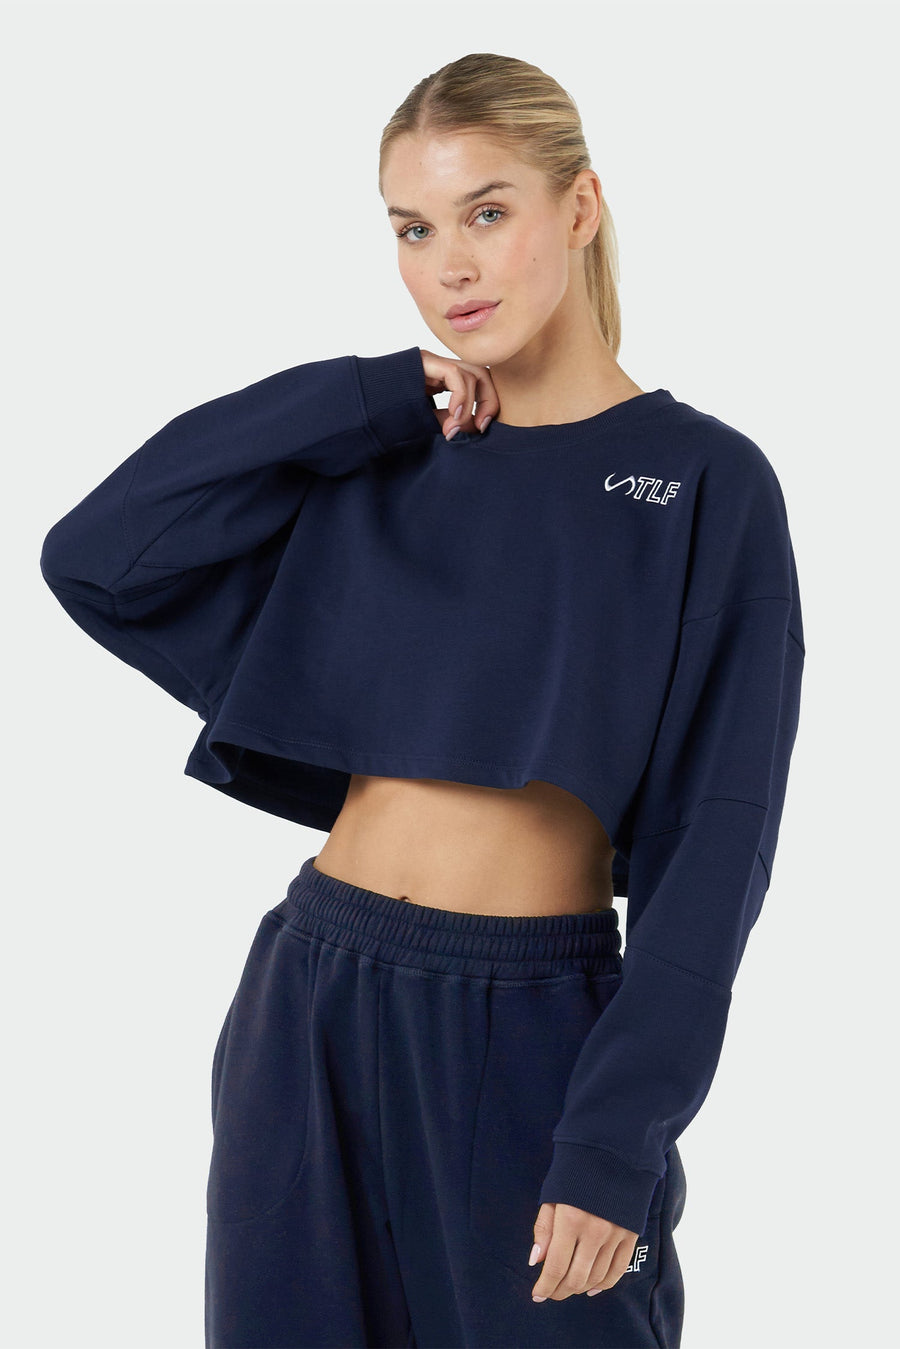 TLF Chill Fleece Oversized Crop Sweatshirt - Womens Oversized Sweatshirts - Navy - 4